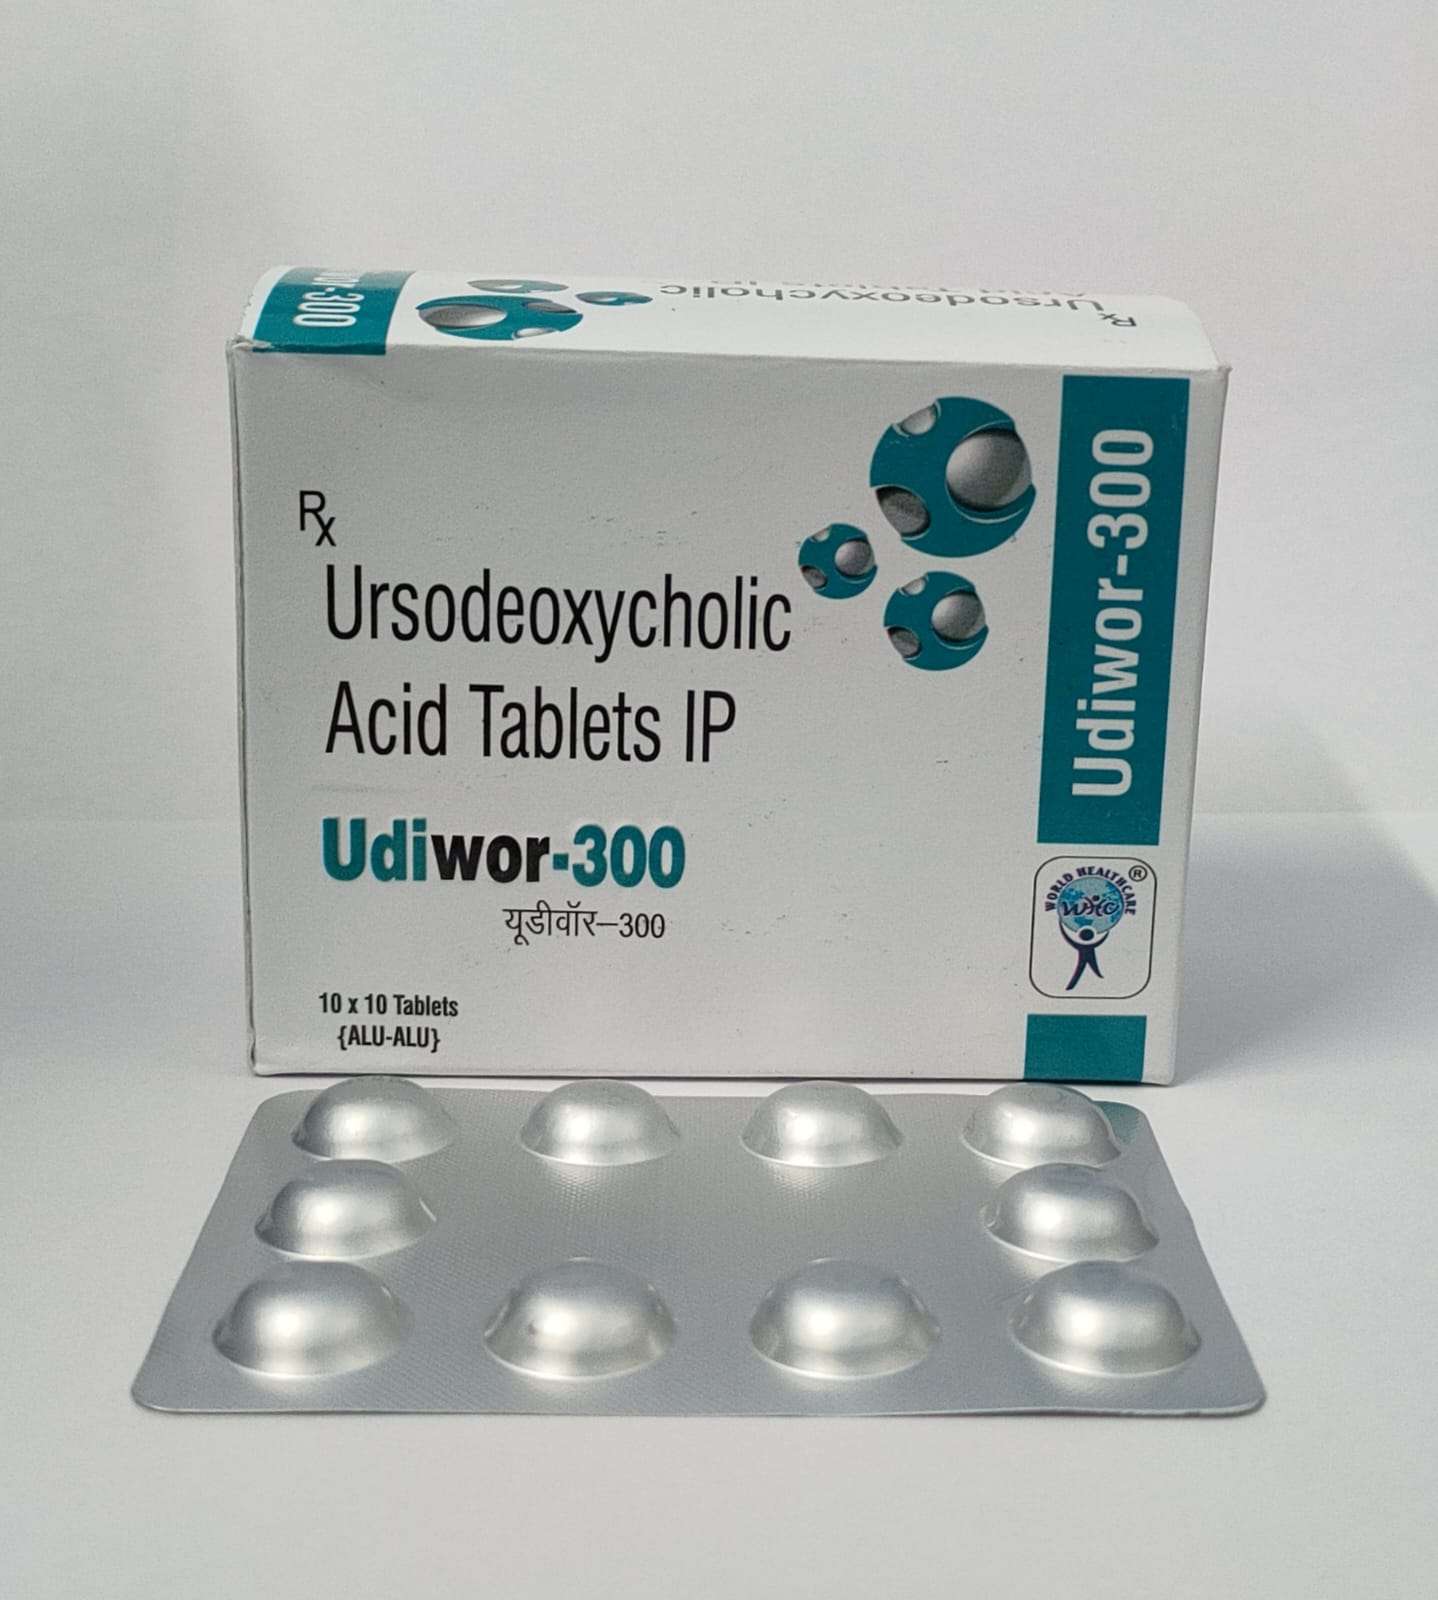 ursodeoxycholic acid 300 mg